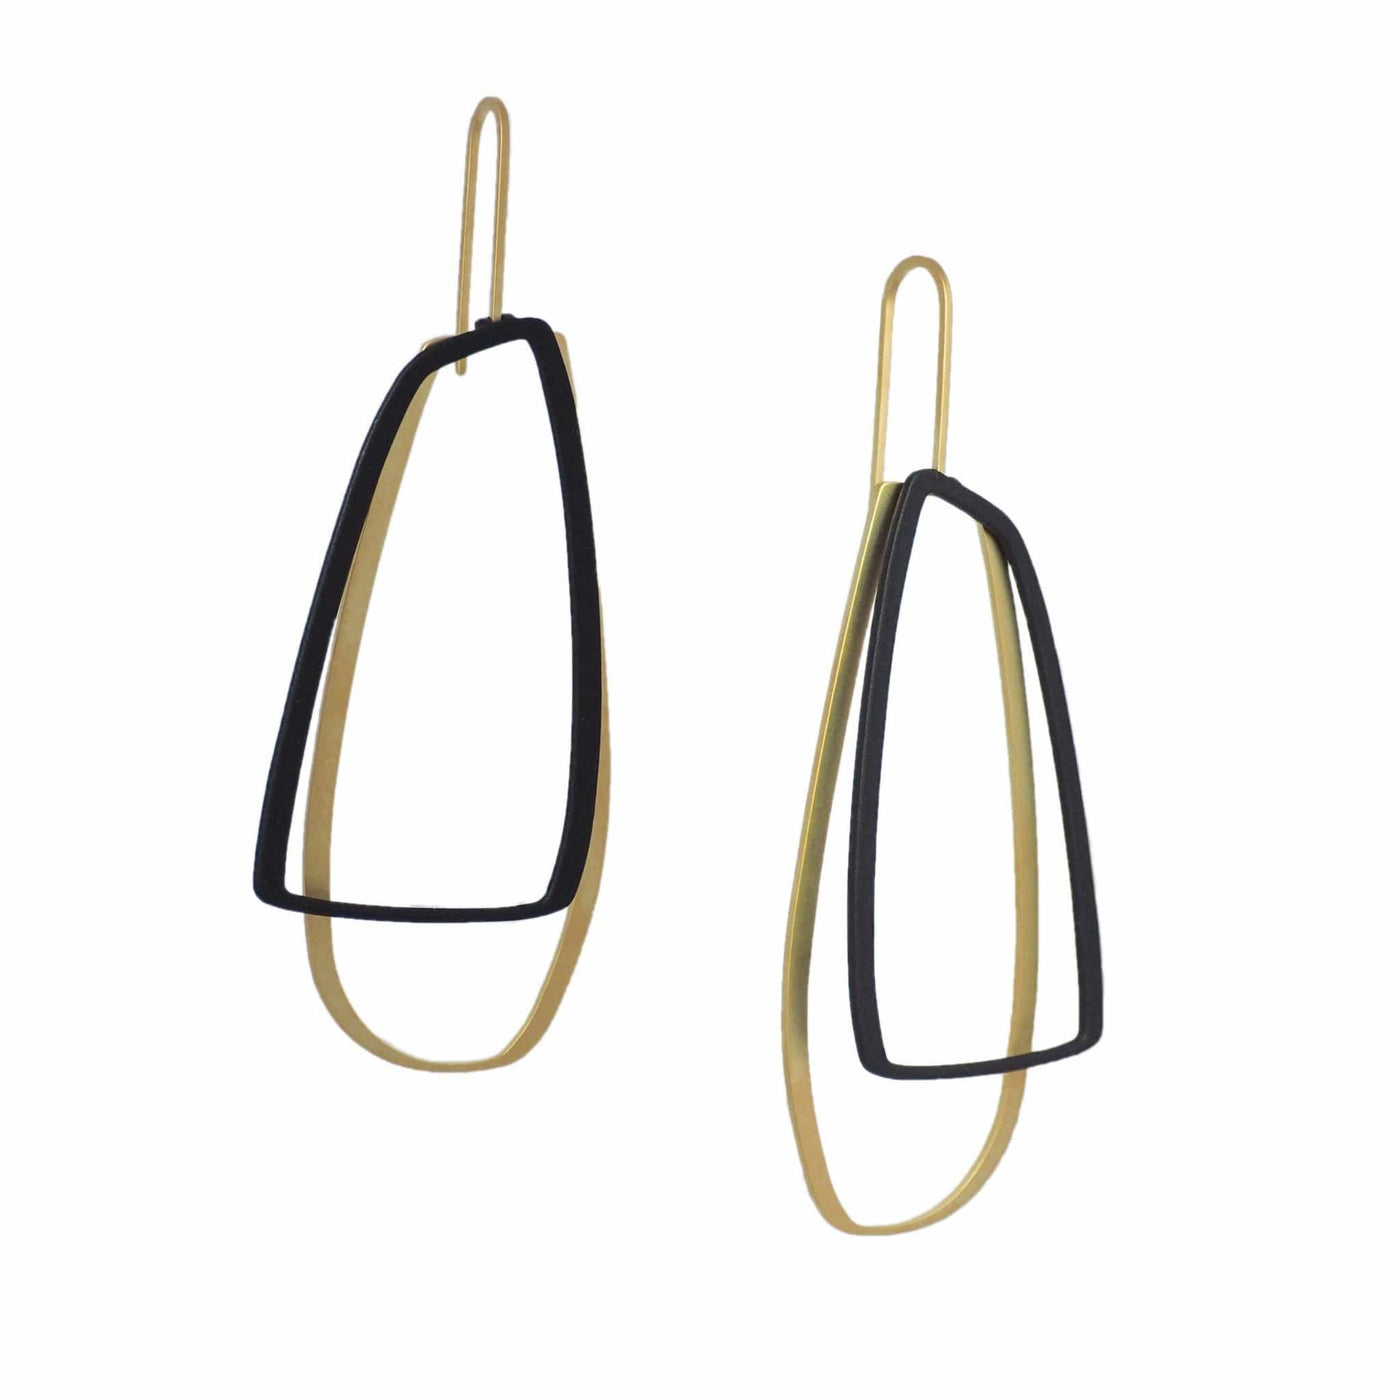 X2 Large Outline Earrings - Raw/ Black - inSync design